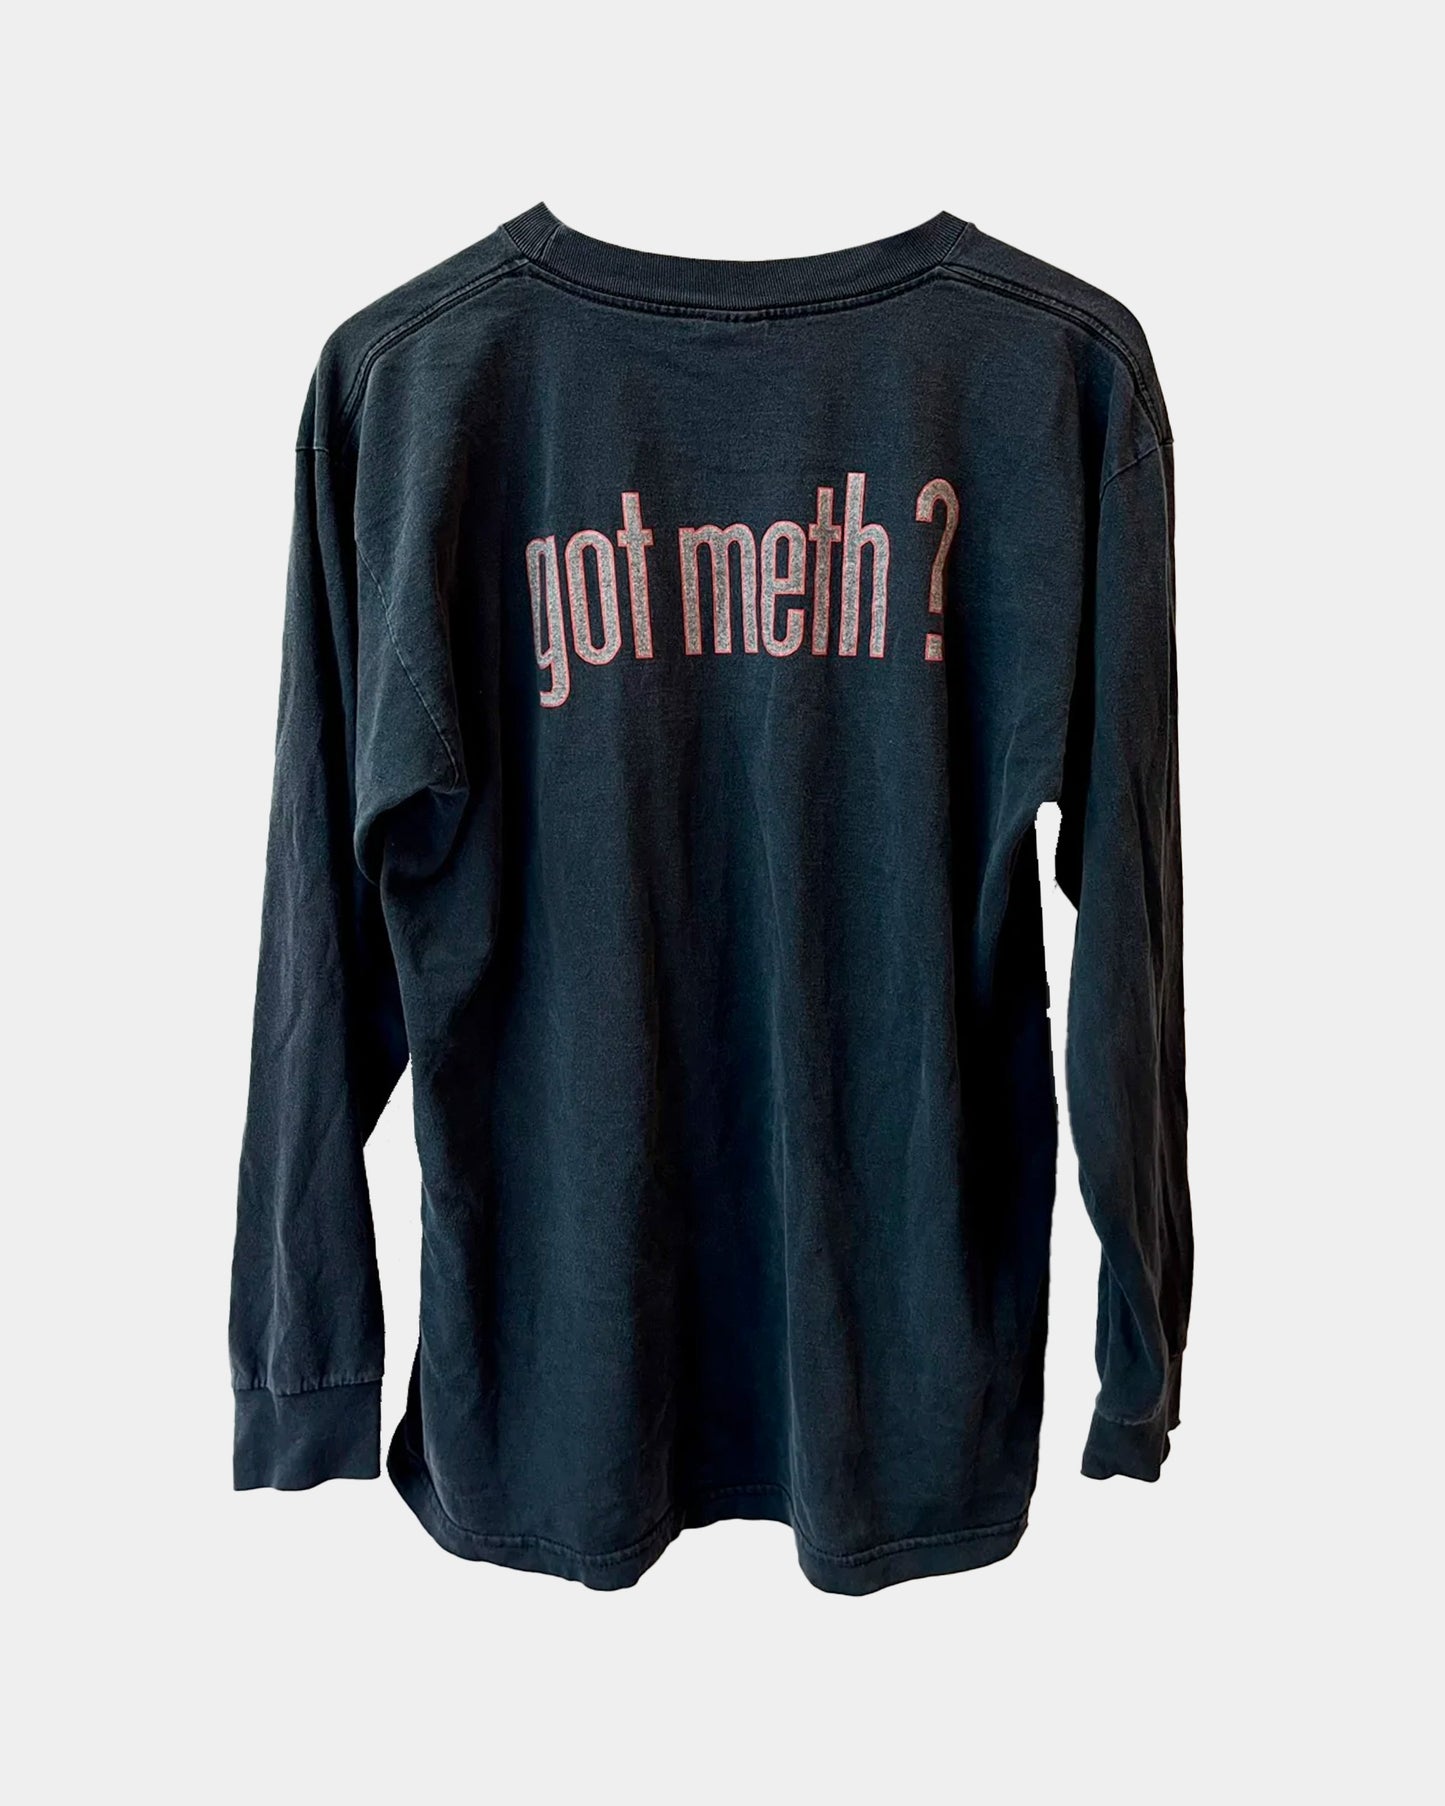 Vintage GOT METH ?! Shirt 4Gseller